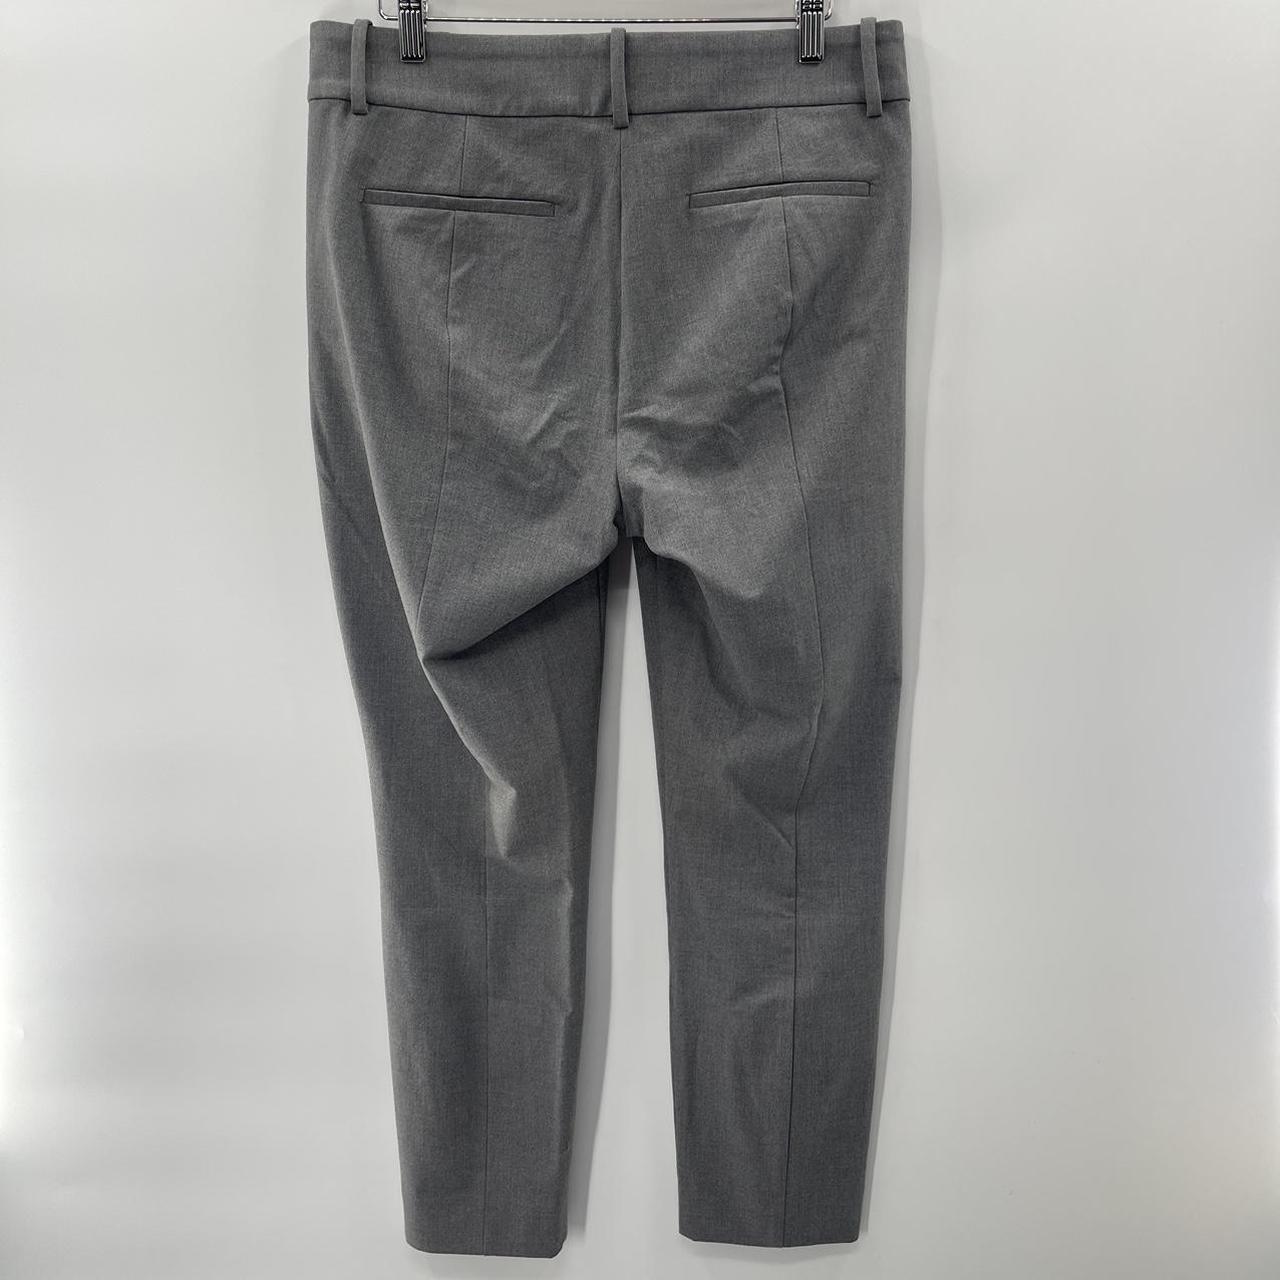 Grey casual pants Size 8 #formal #business - Depop